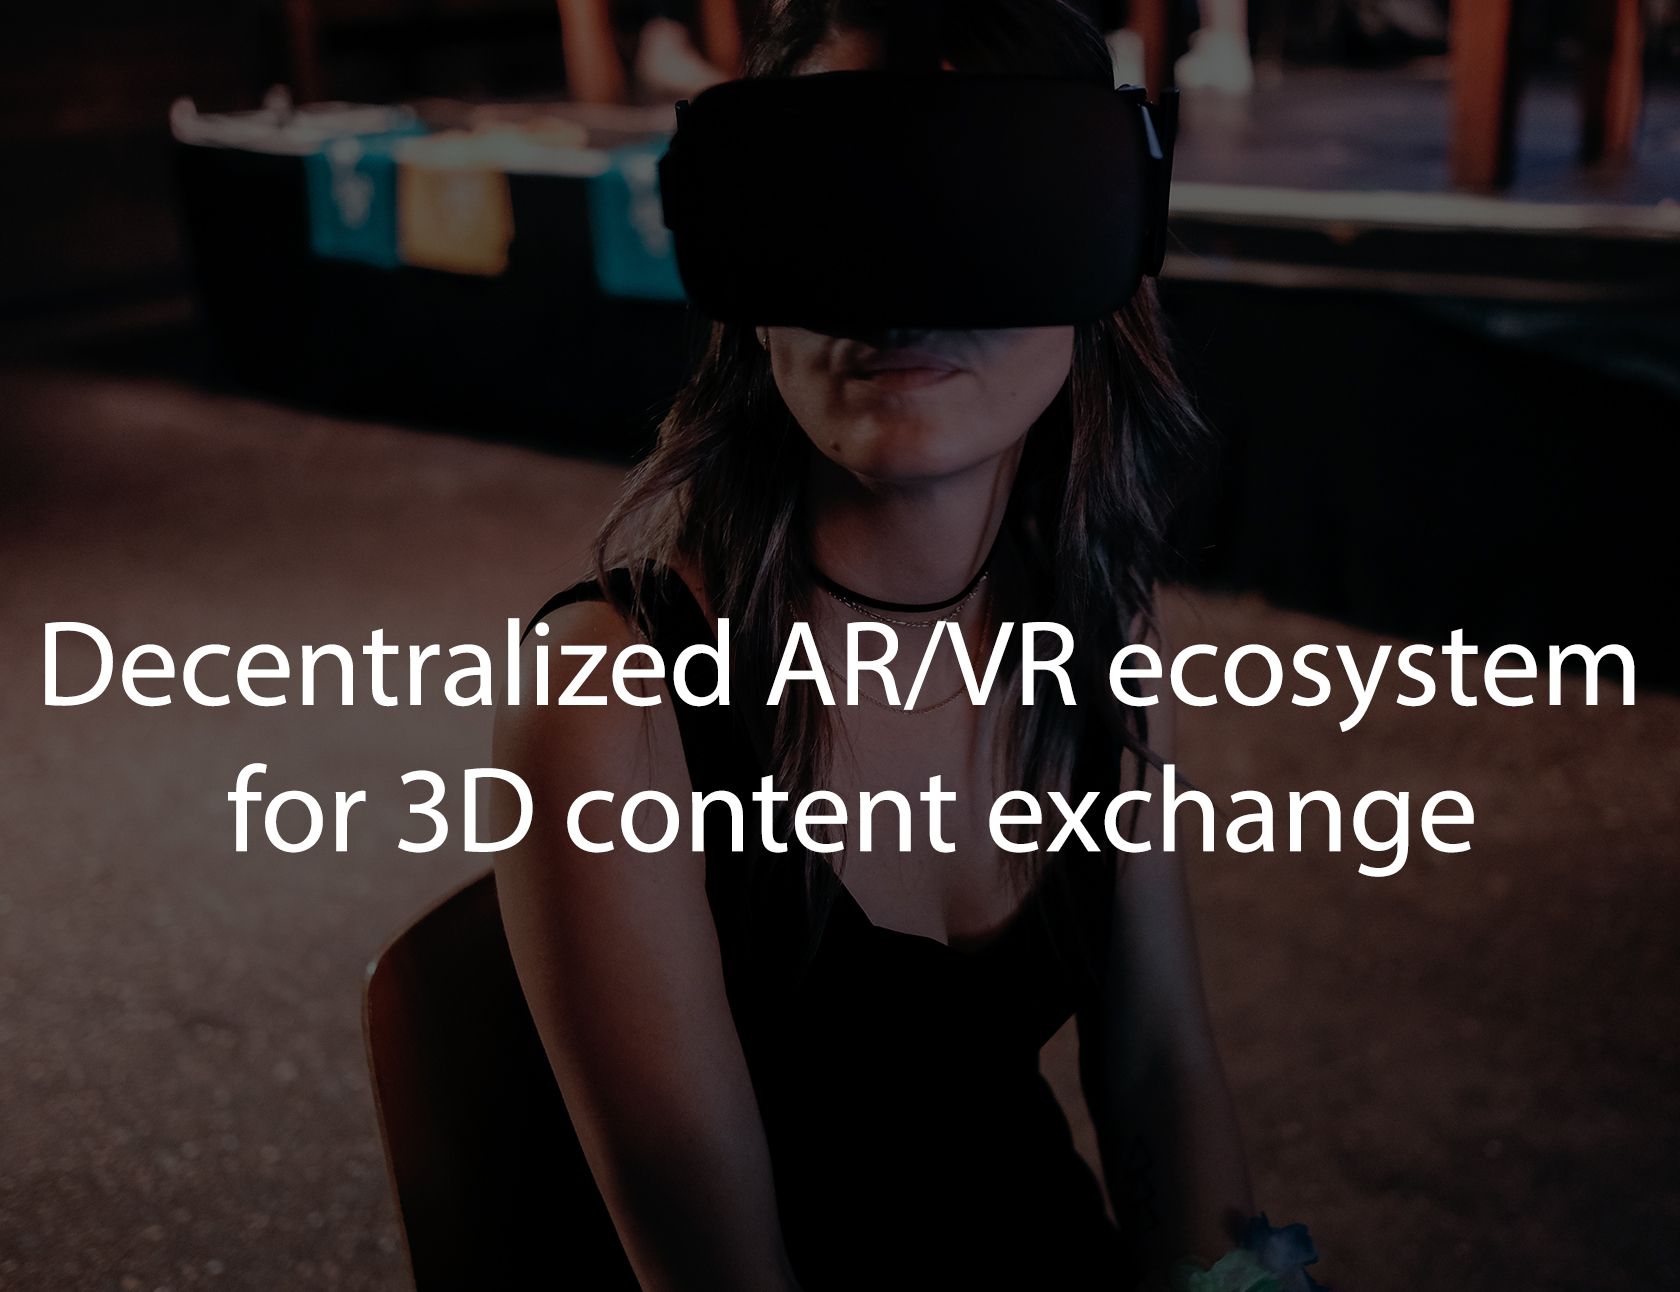 Decentralized AR/VR ecosystem for 3D content exchange